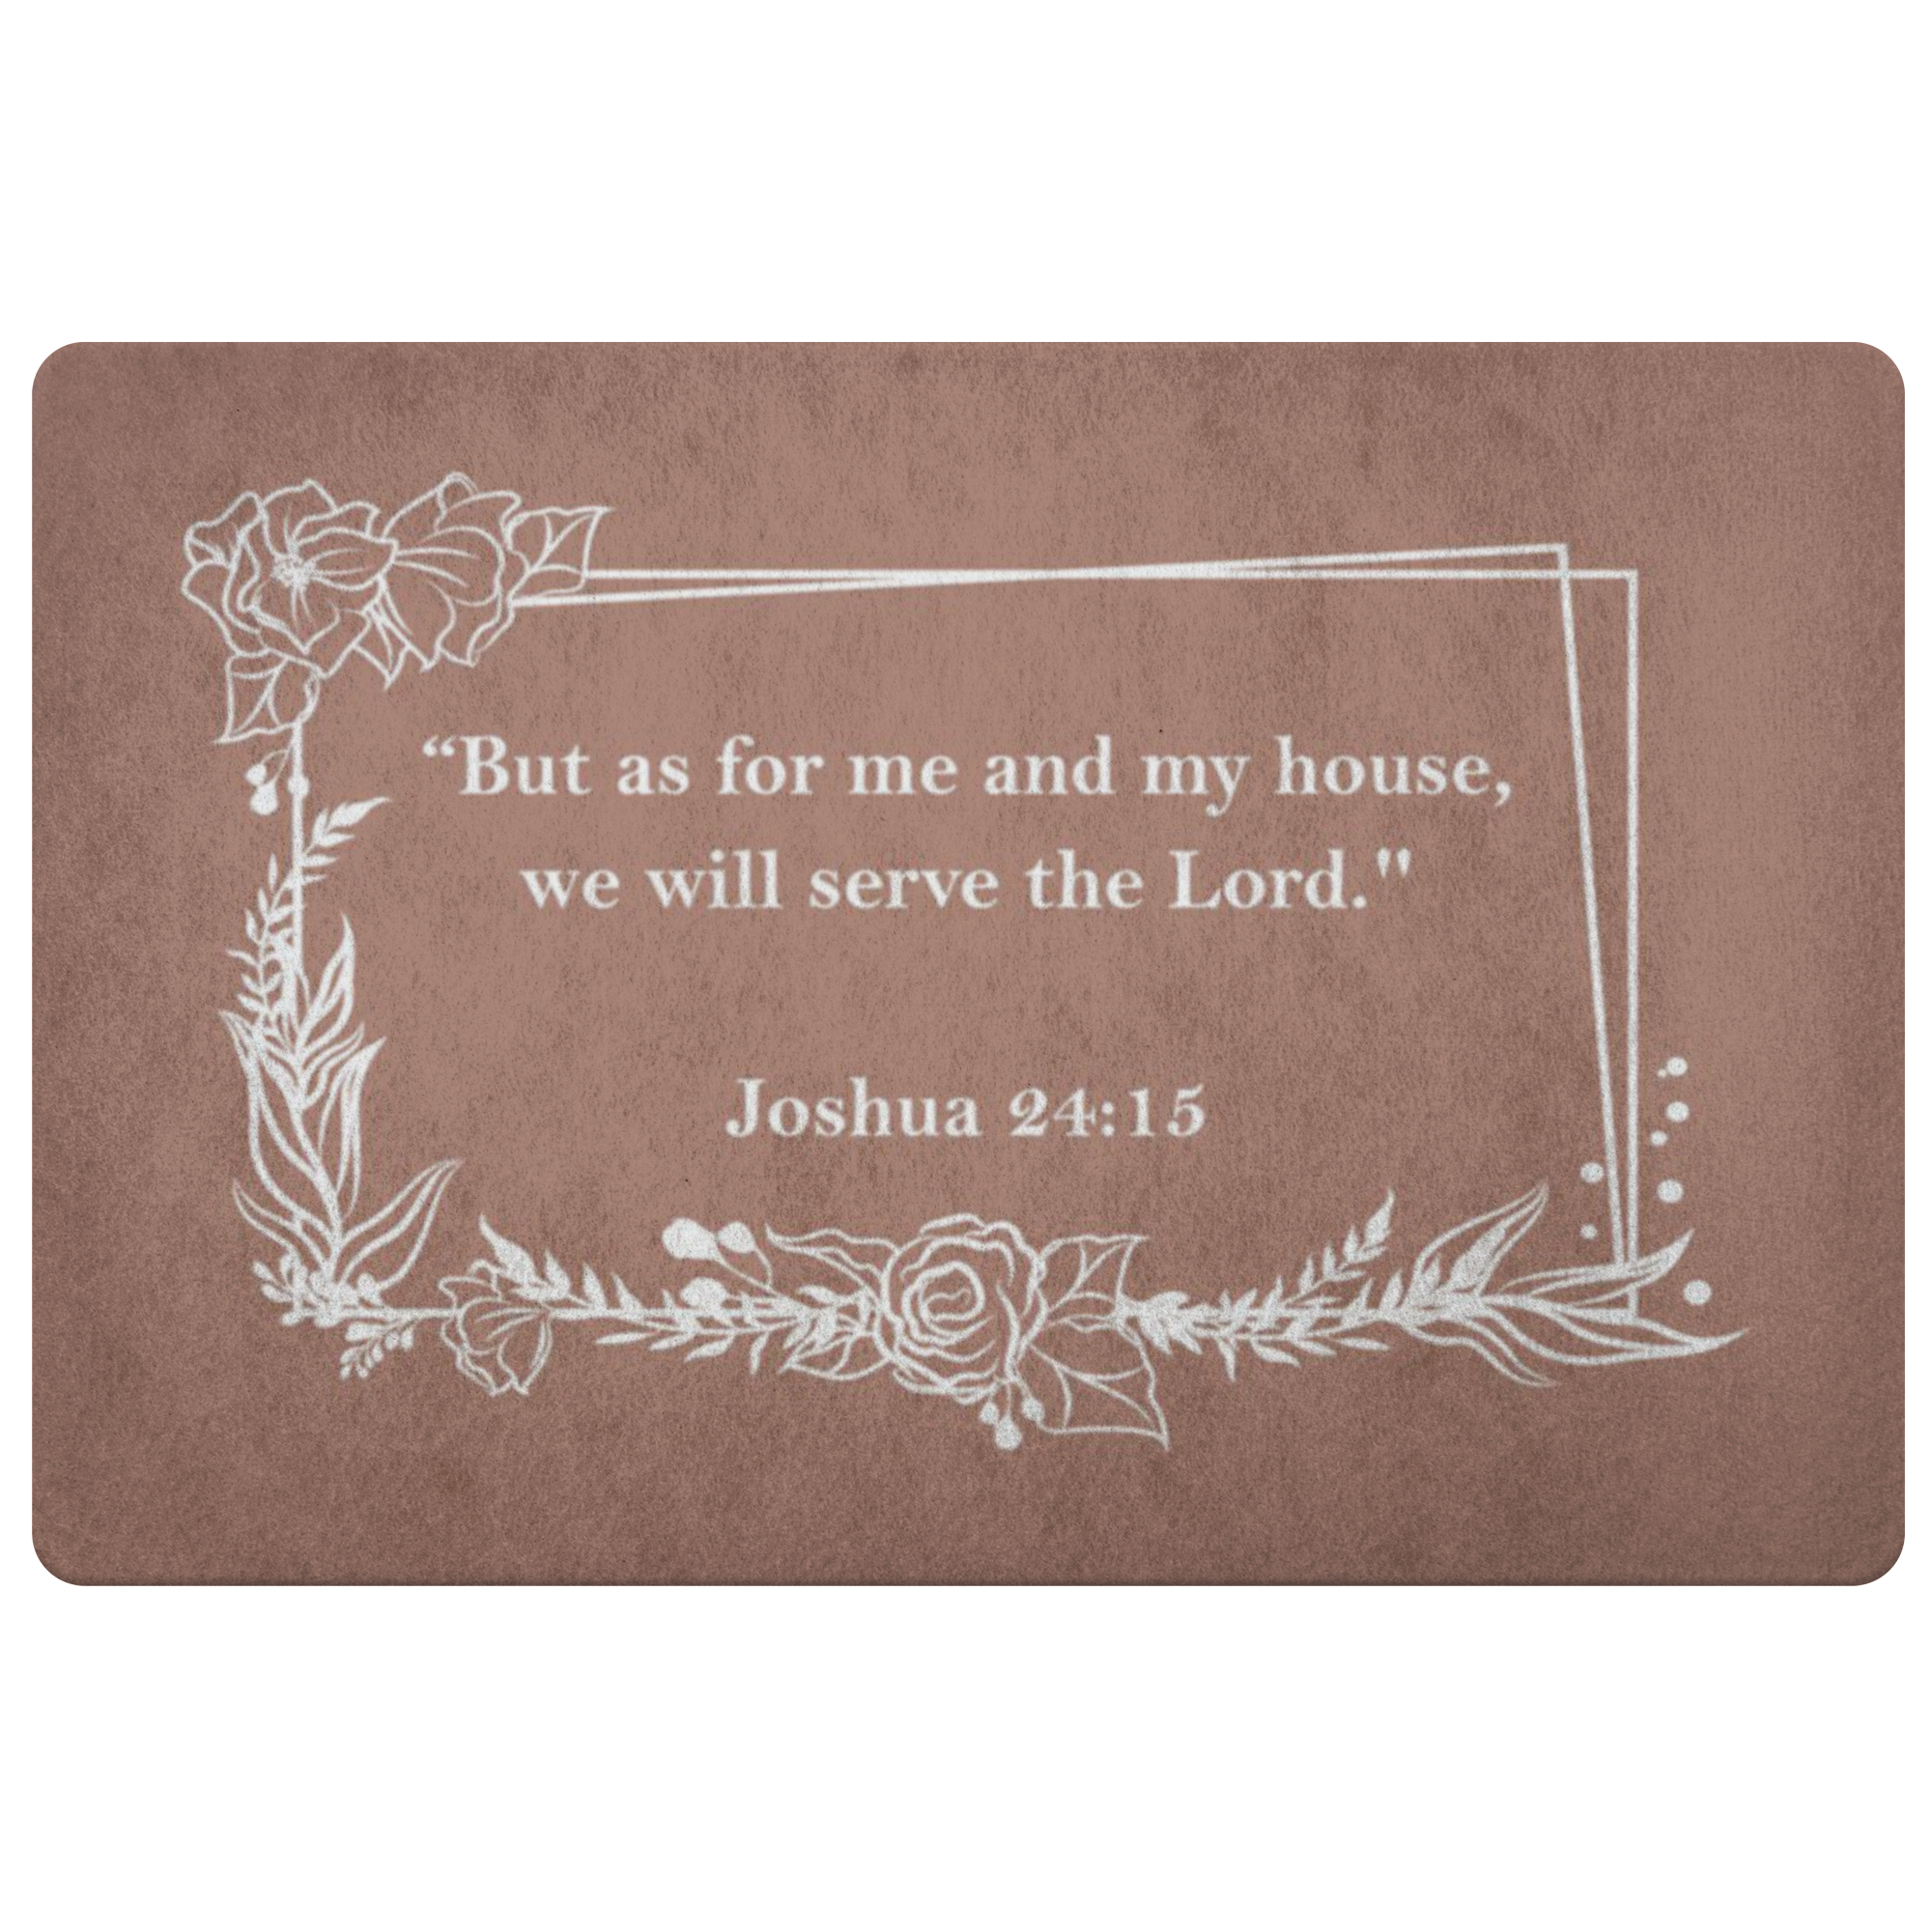 We Will Serve The Lord (Doormat) Dark Version